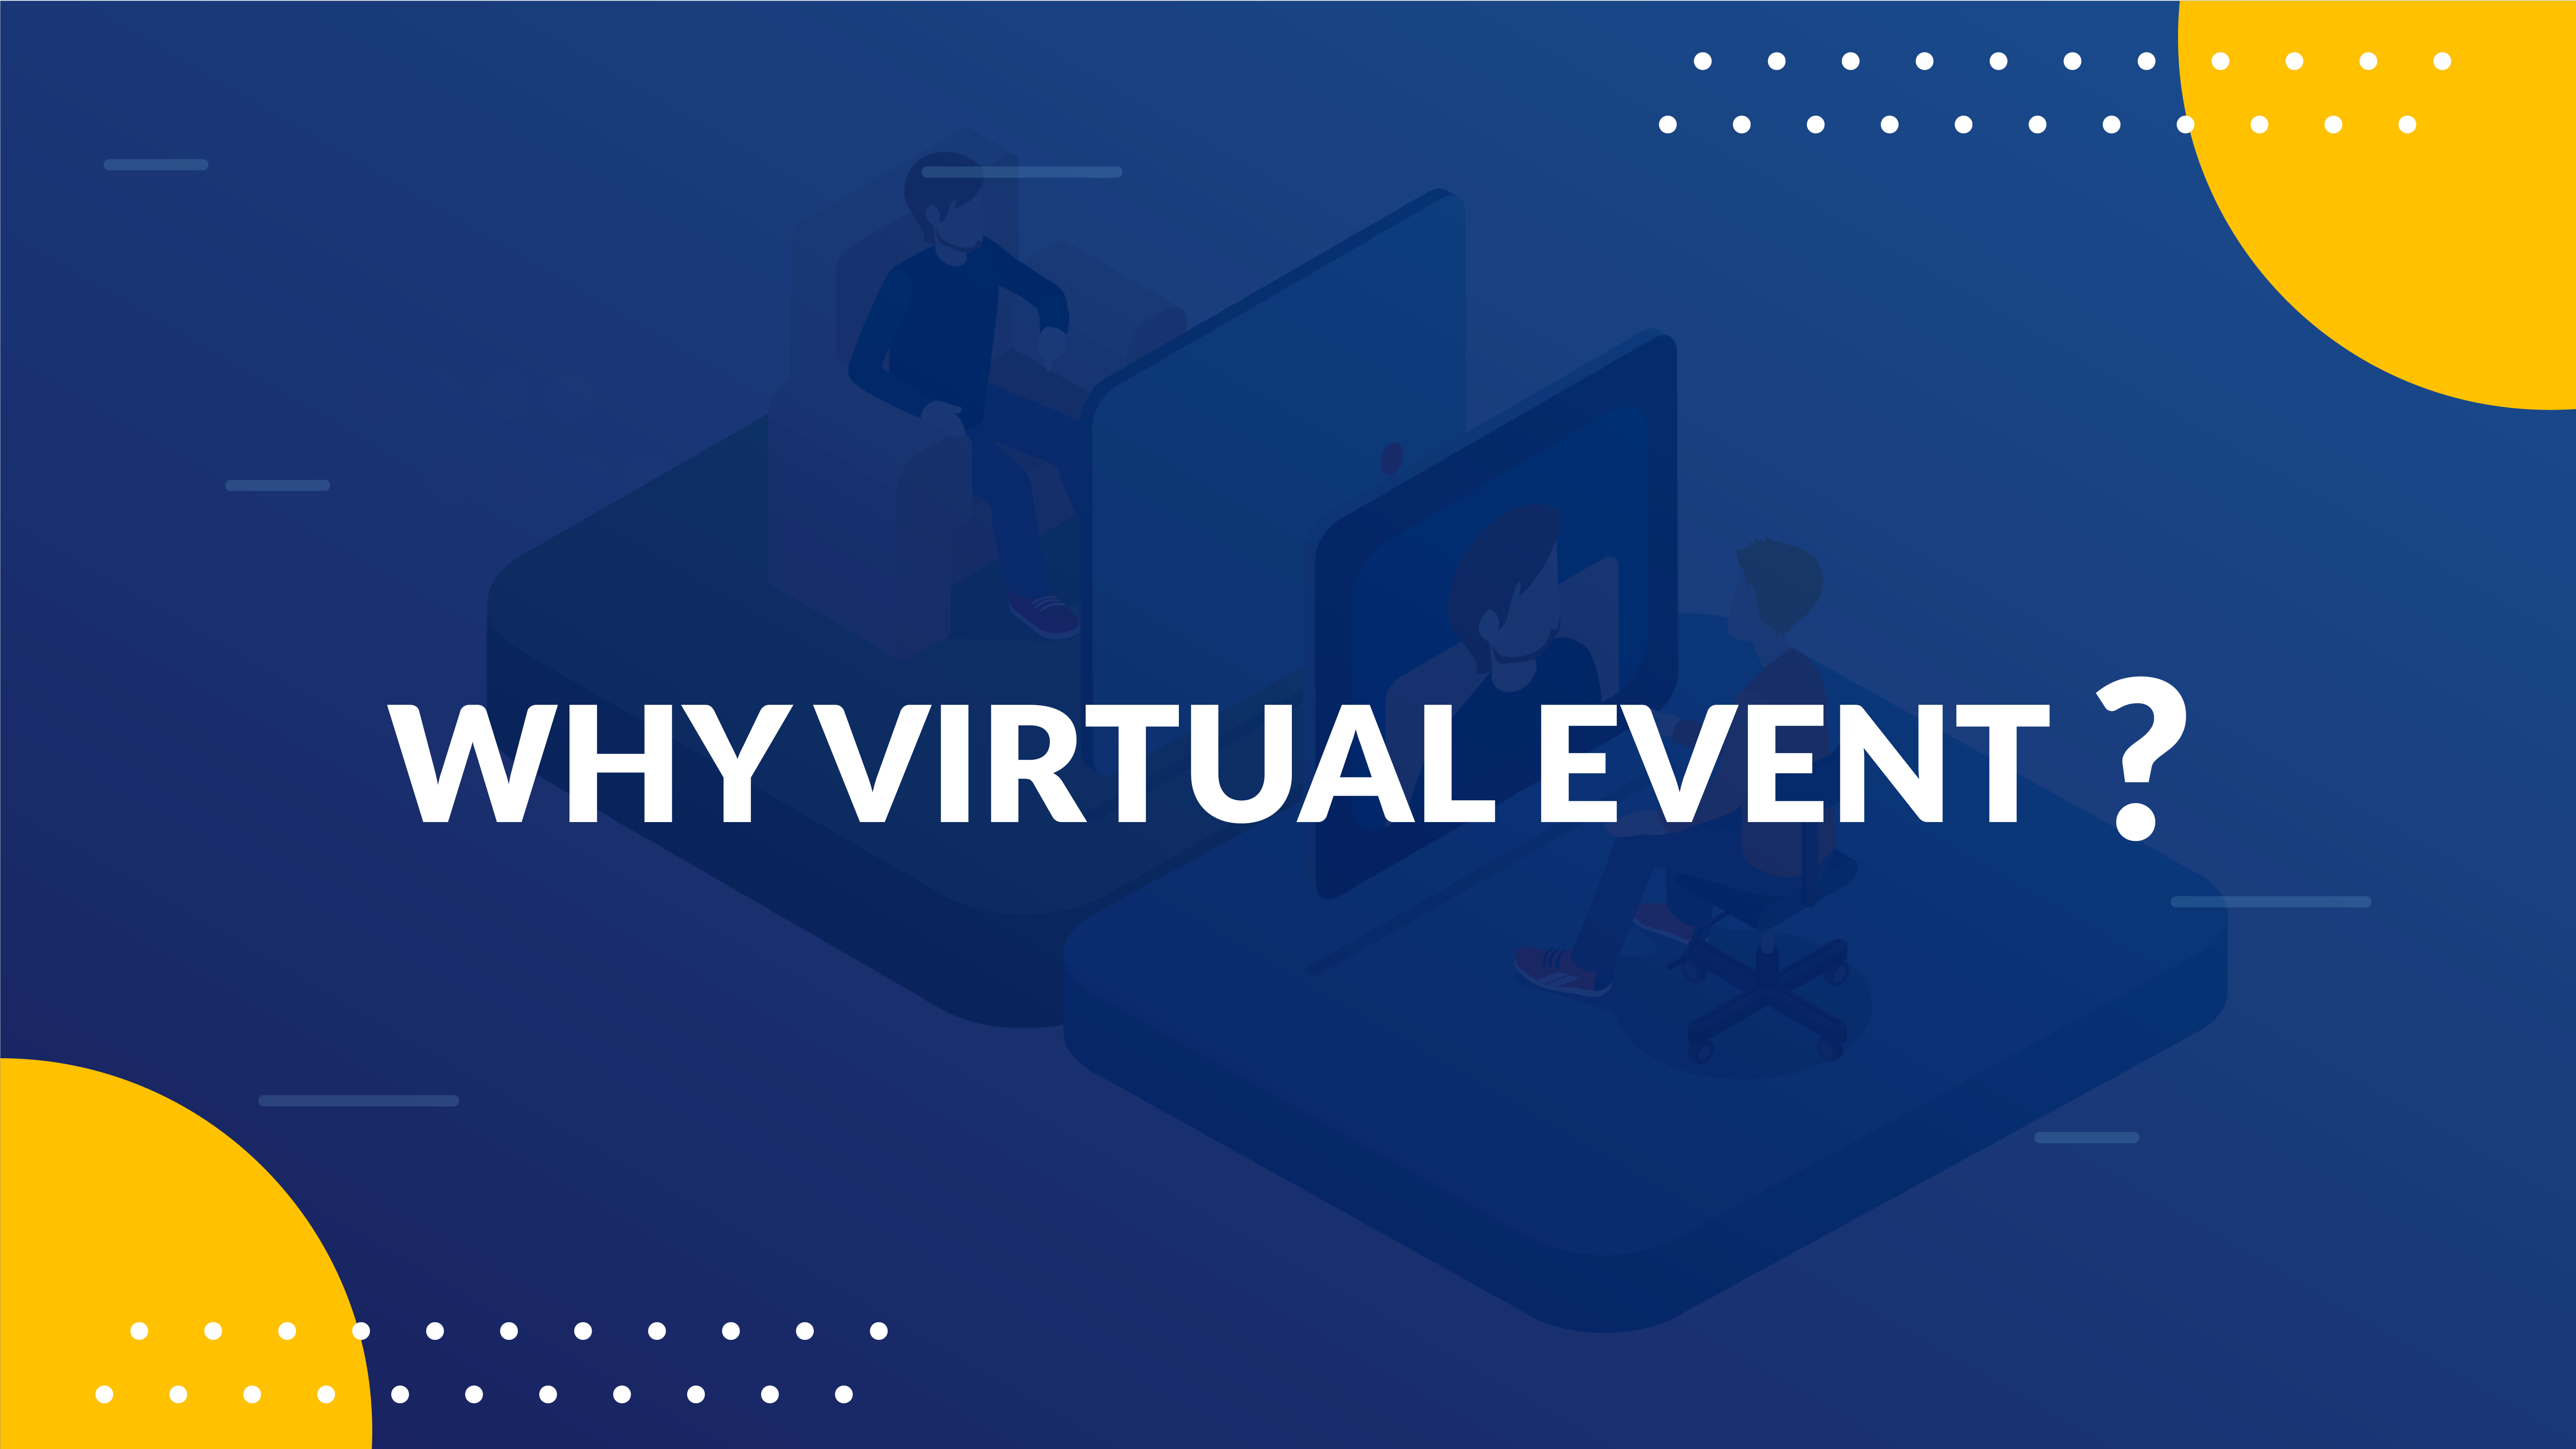 Virtual event video for InnovatiCuris